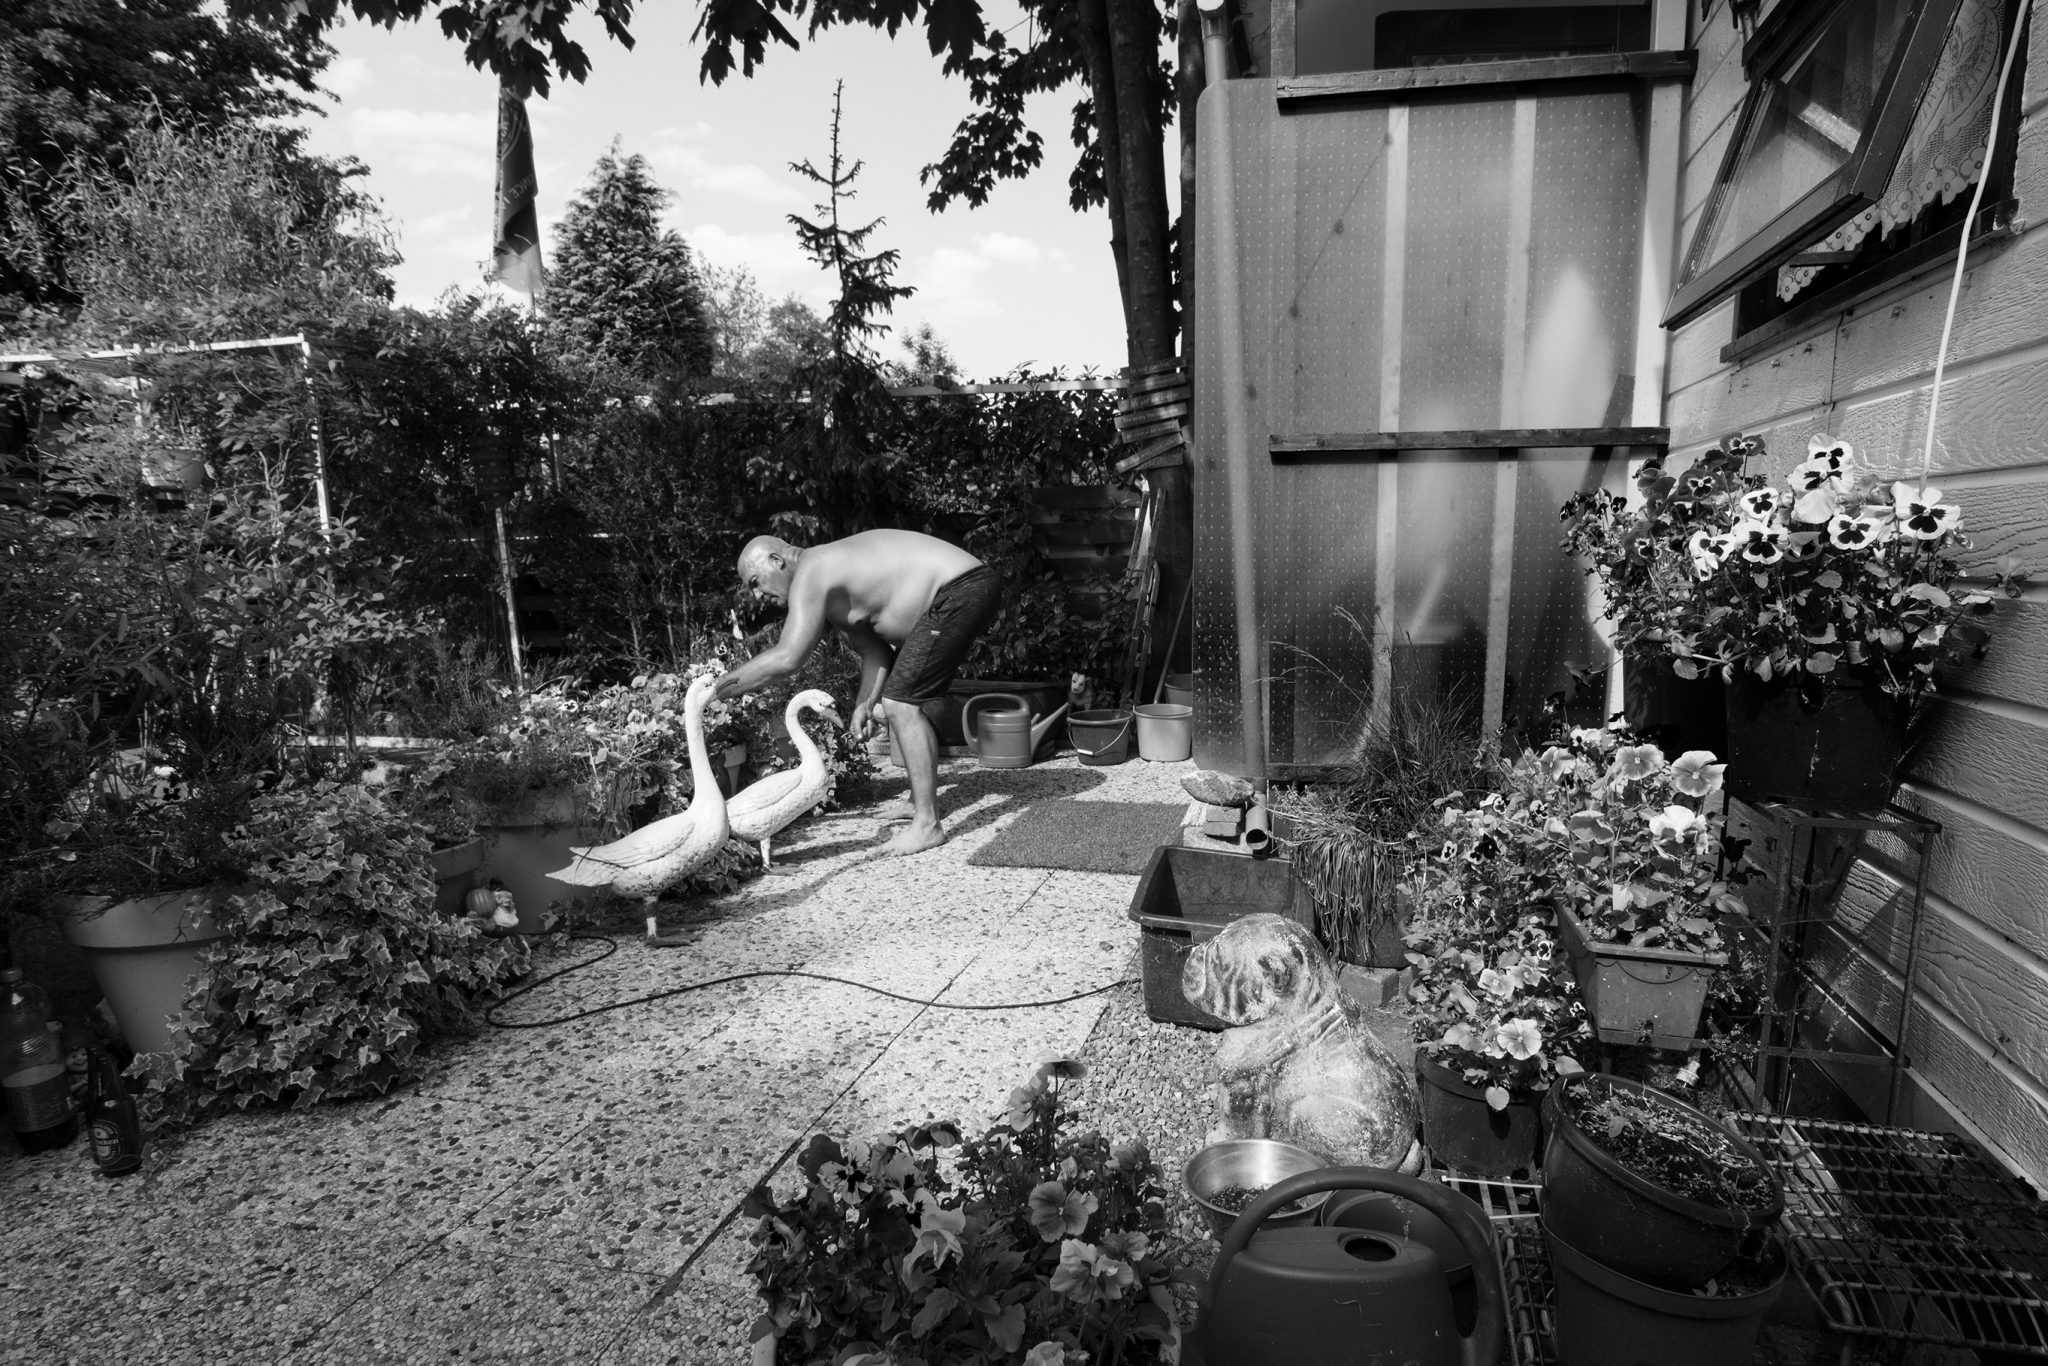 John in the garden - Documentary Photography